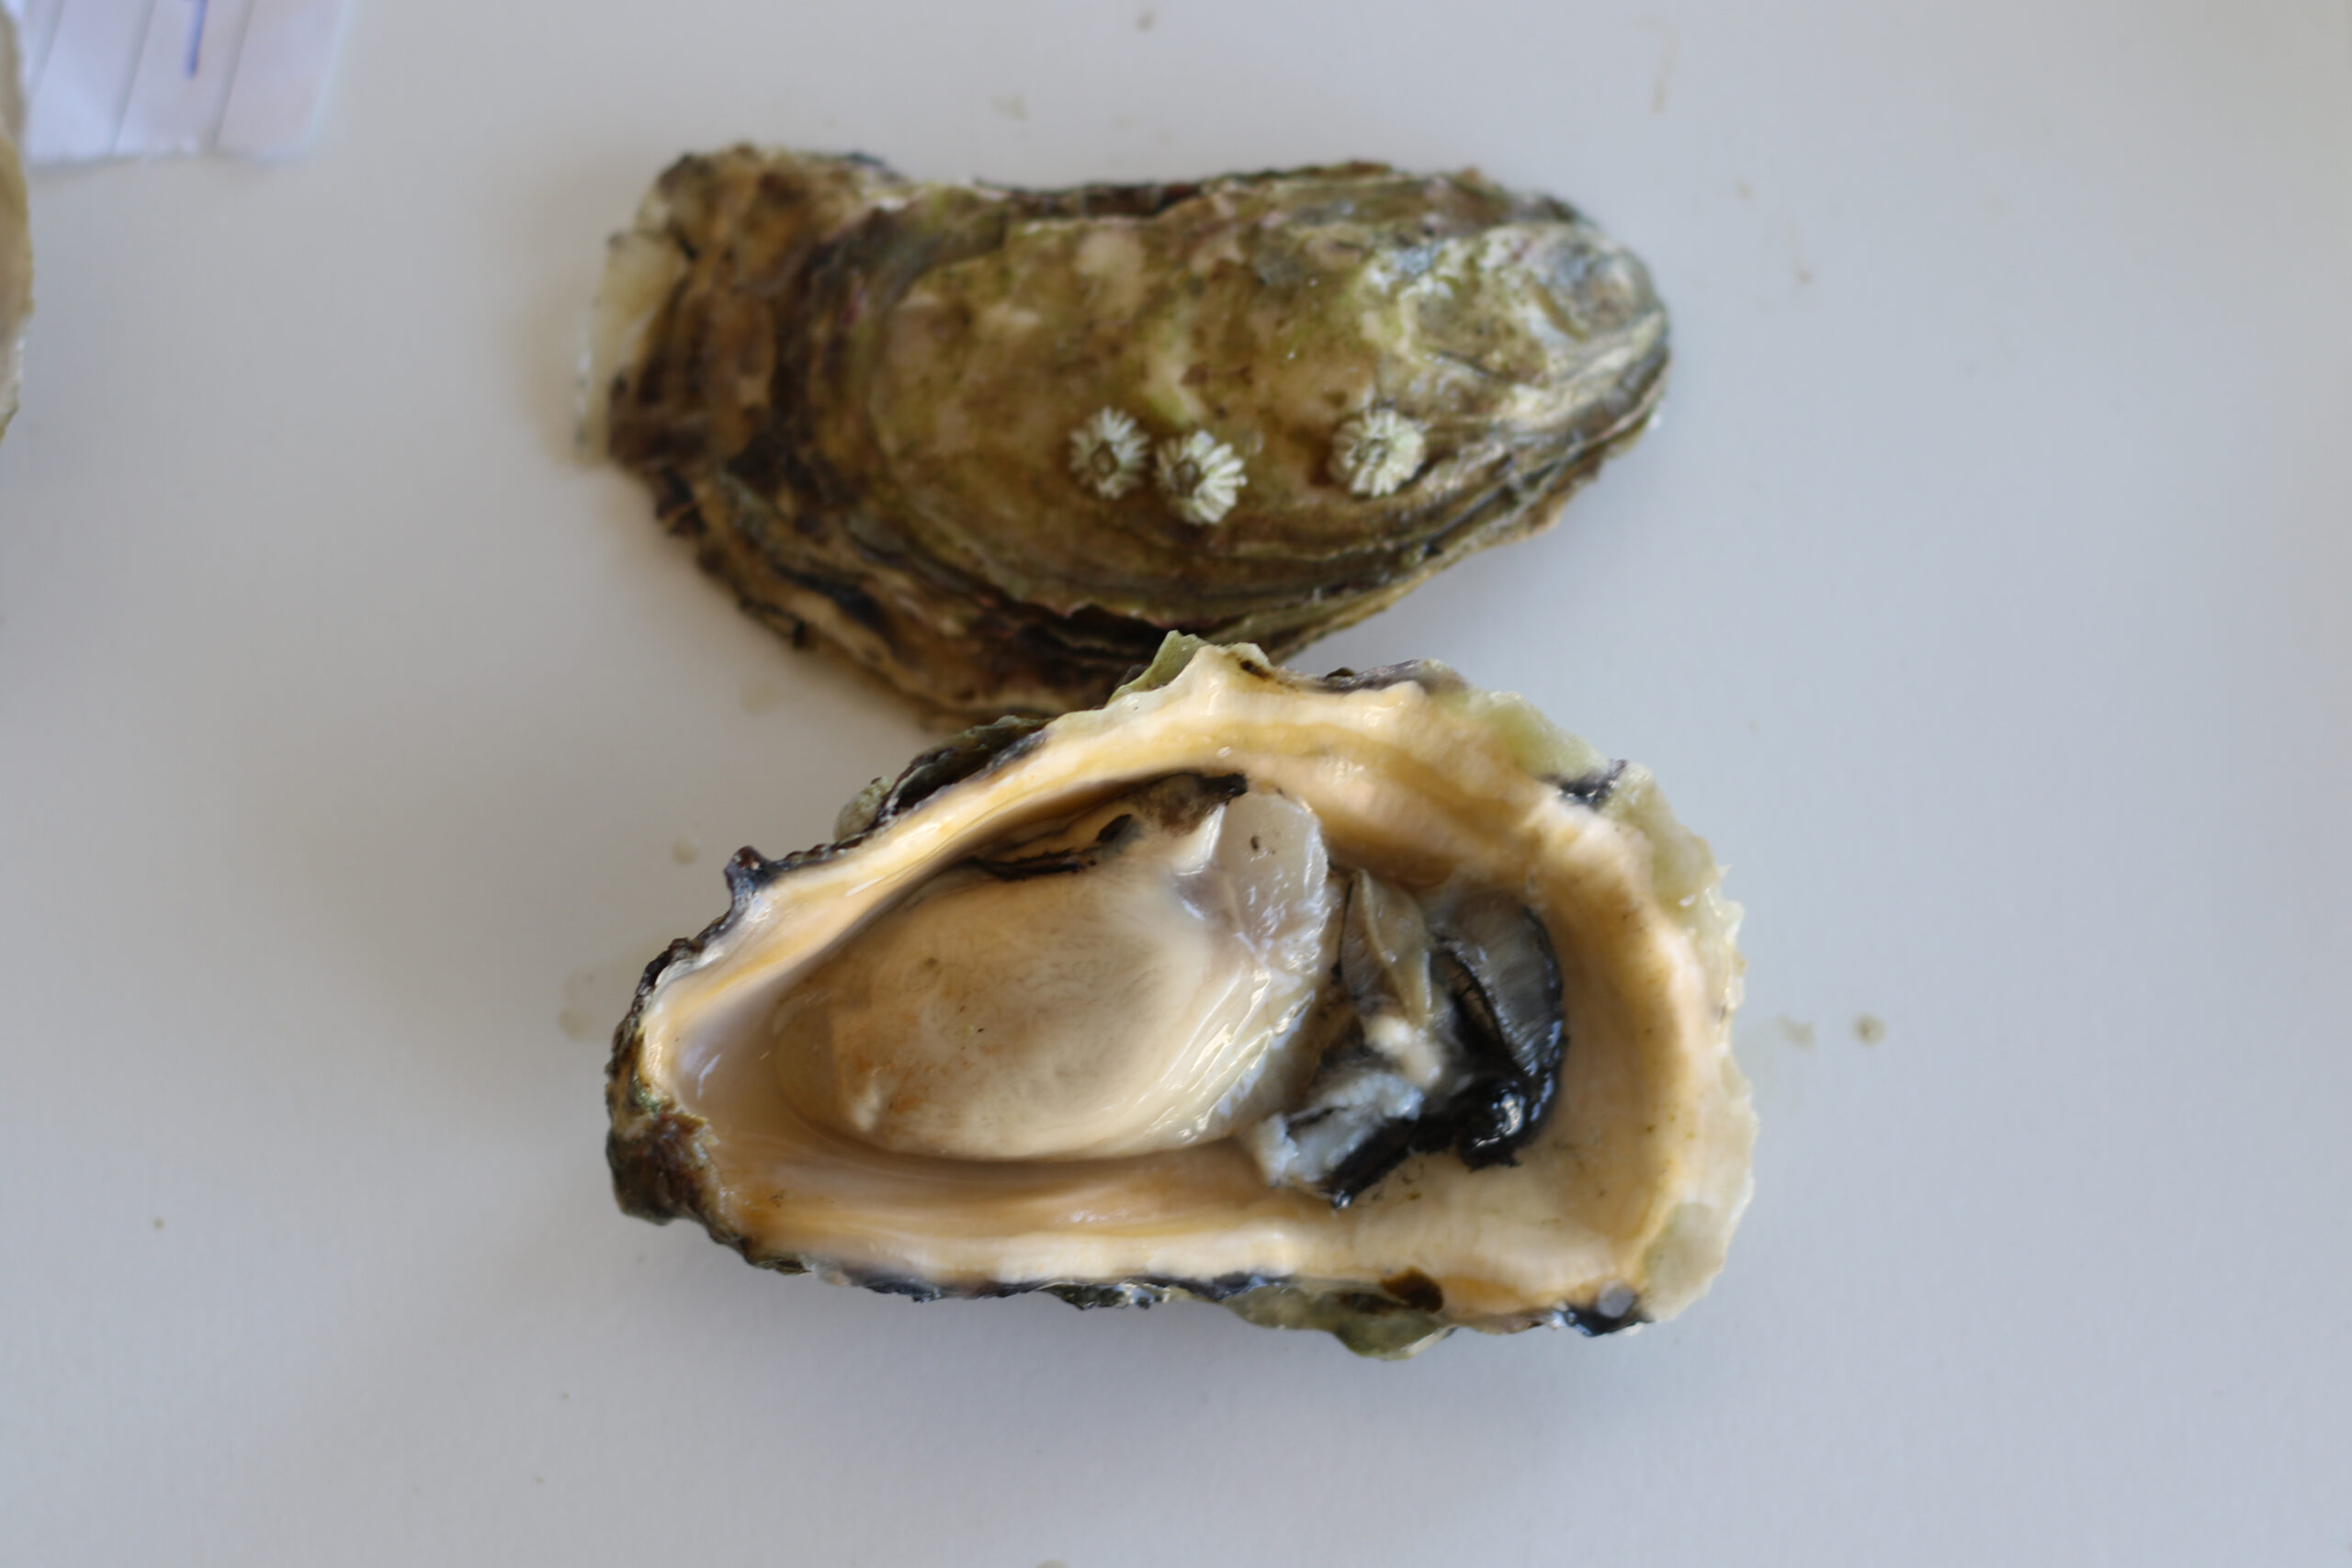 Fat Bastard oyster at Santa Rosa Seafood (Heather Irwin)